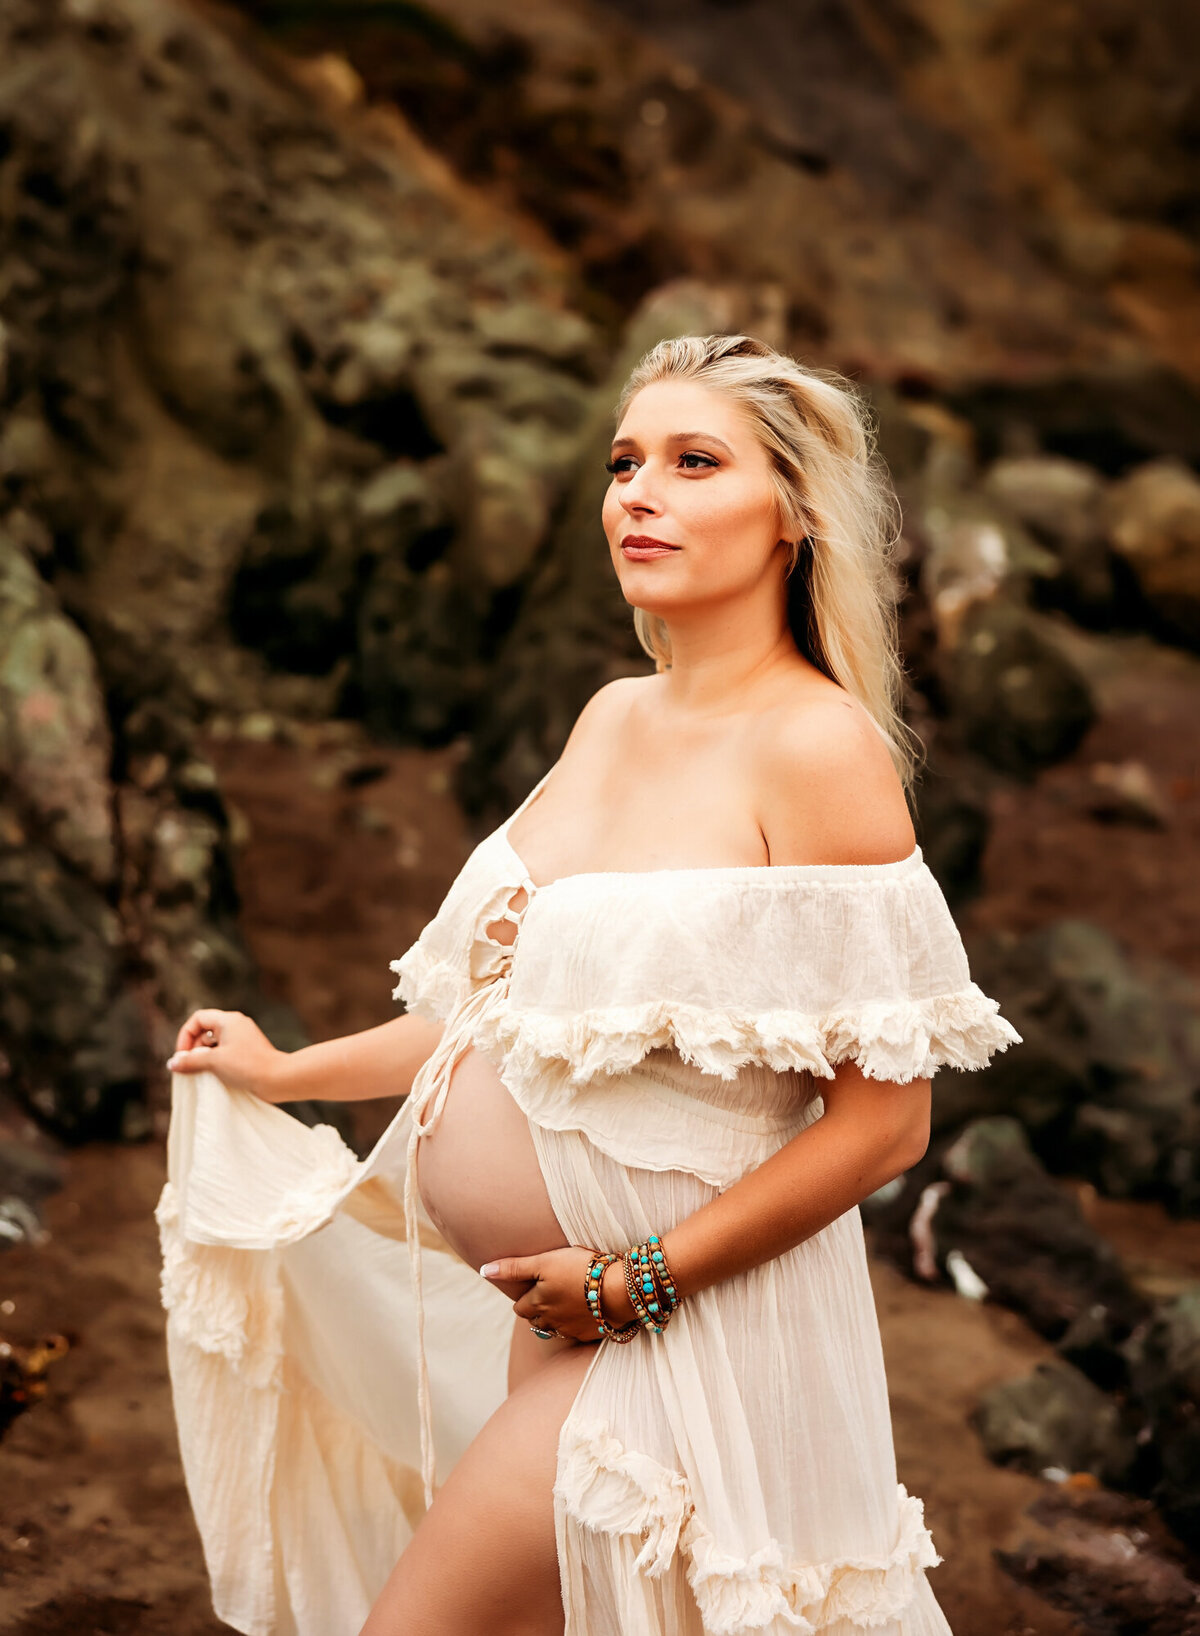 Rocklin-maternity-photographer-2